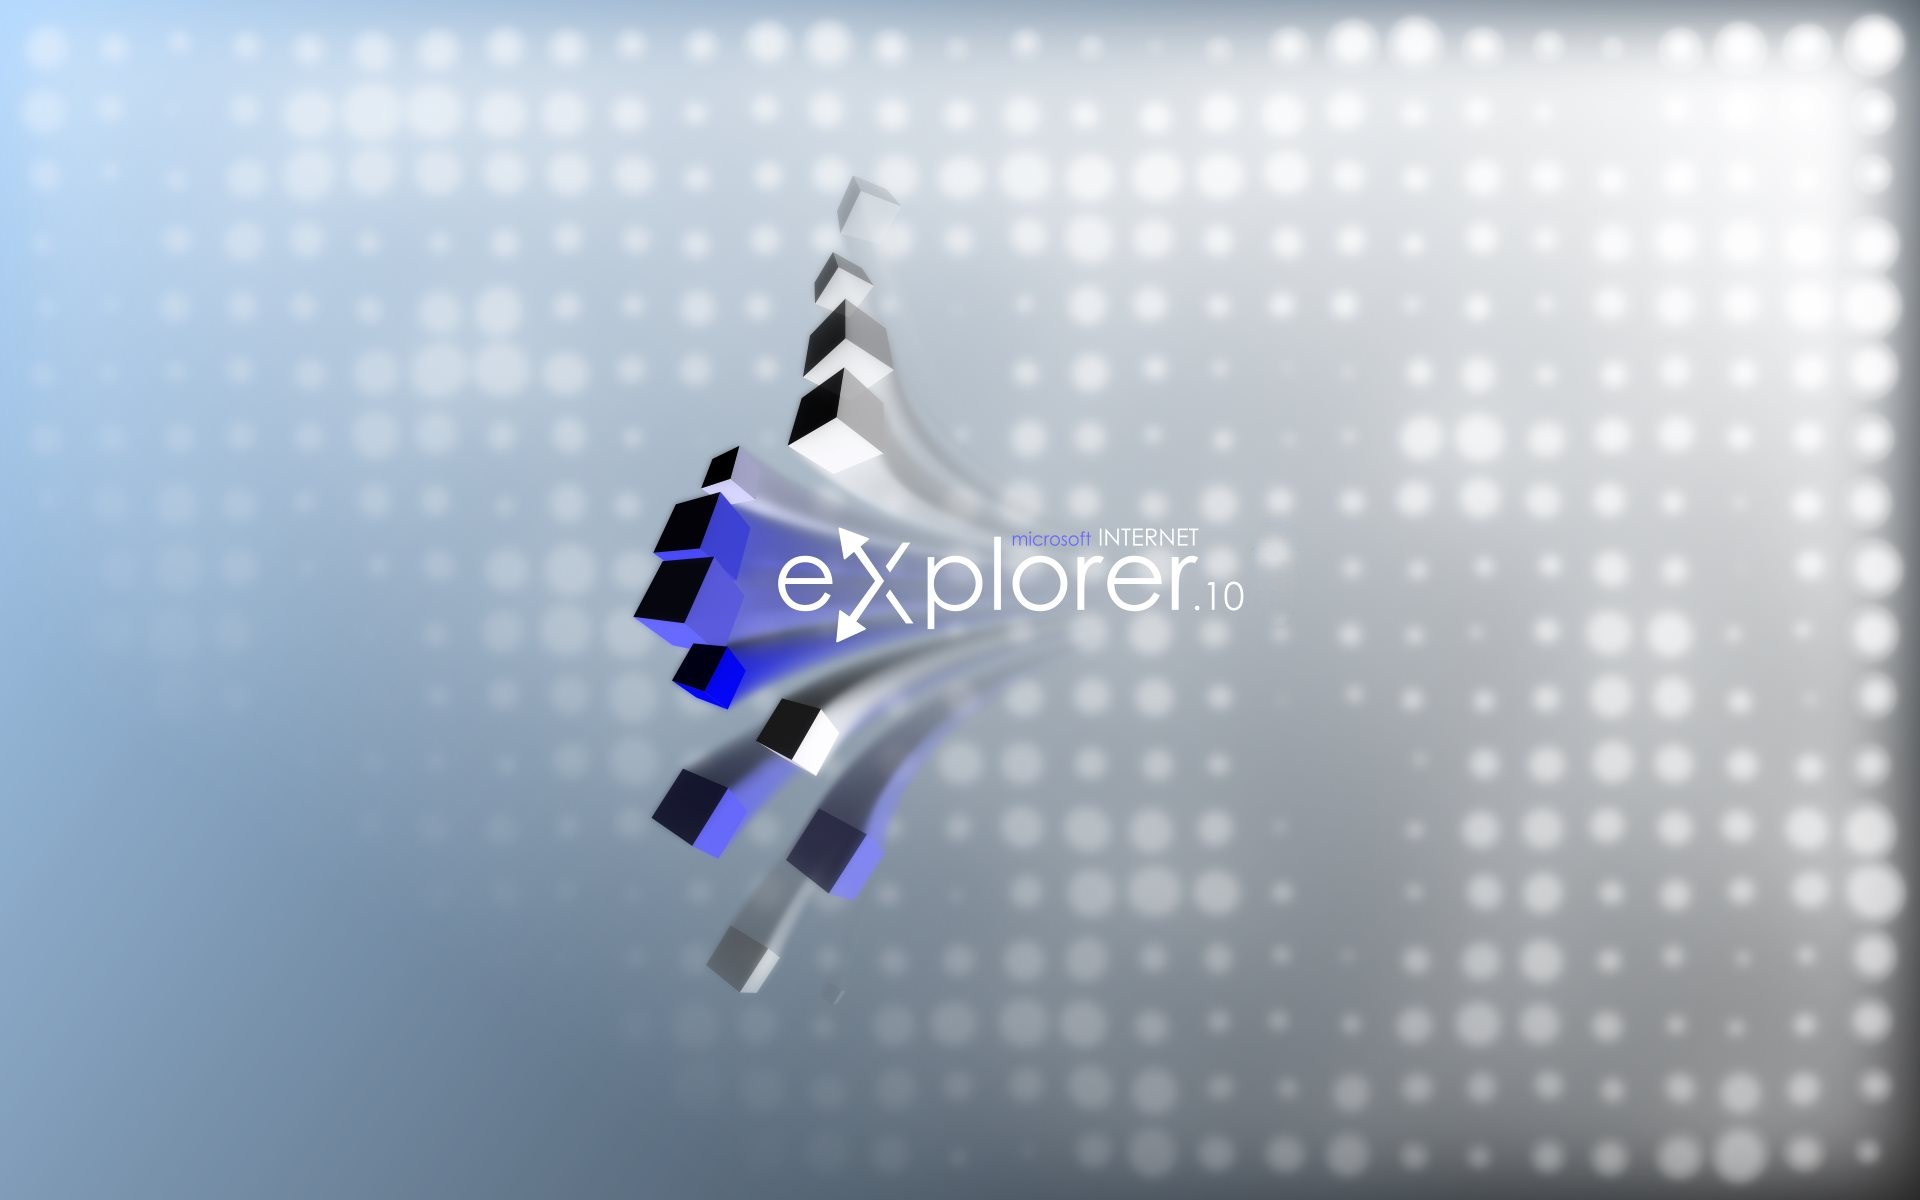 Technology Internet Explorer 1920x1200